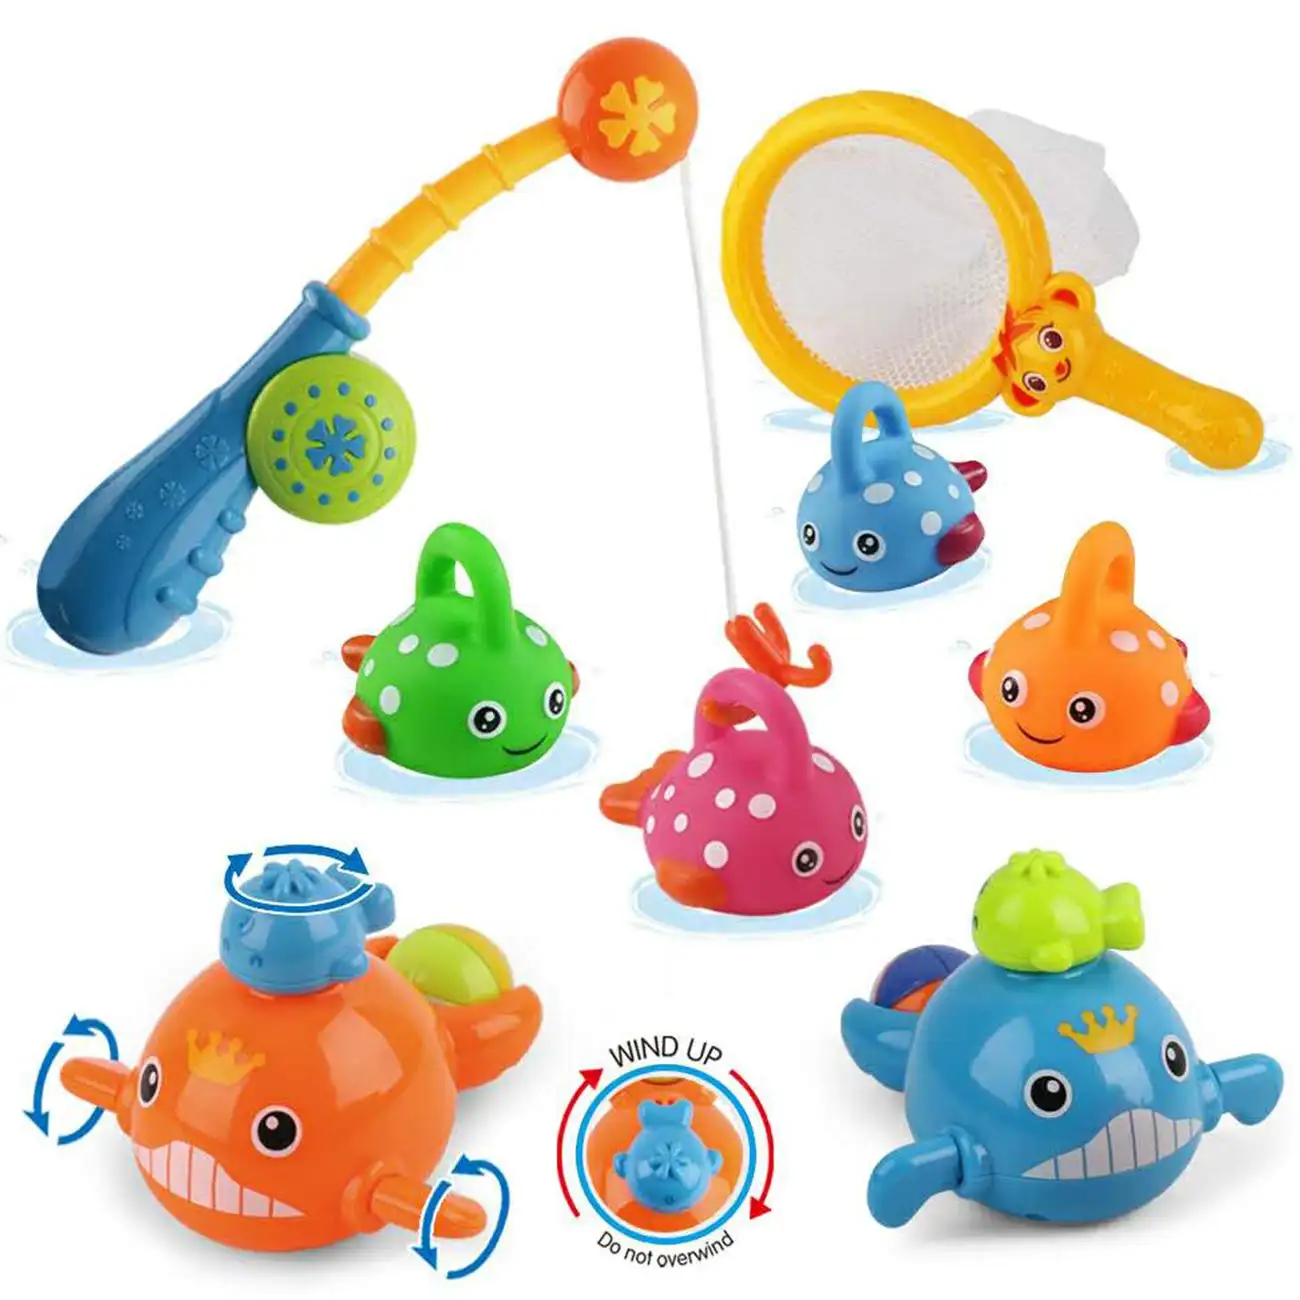 स्नान खिलौने मछली पकड़ने के खेल व्हेल स्नान समय बाथटब टॉडलर्स के बच्चे शिशु मछली 18 महीने और ऊपर